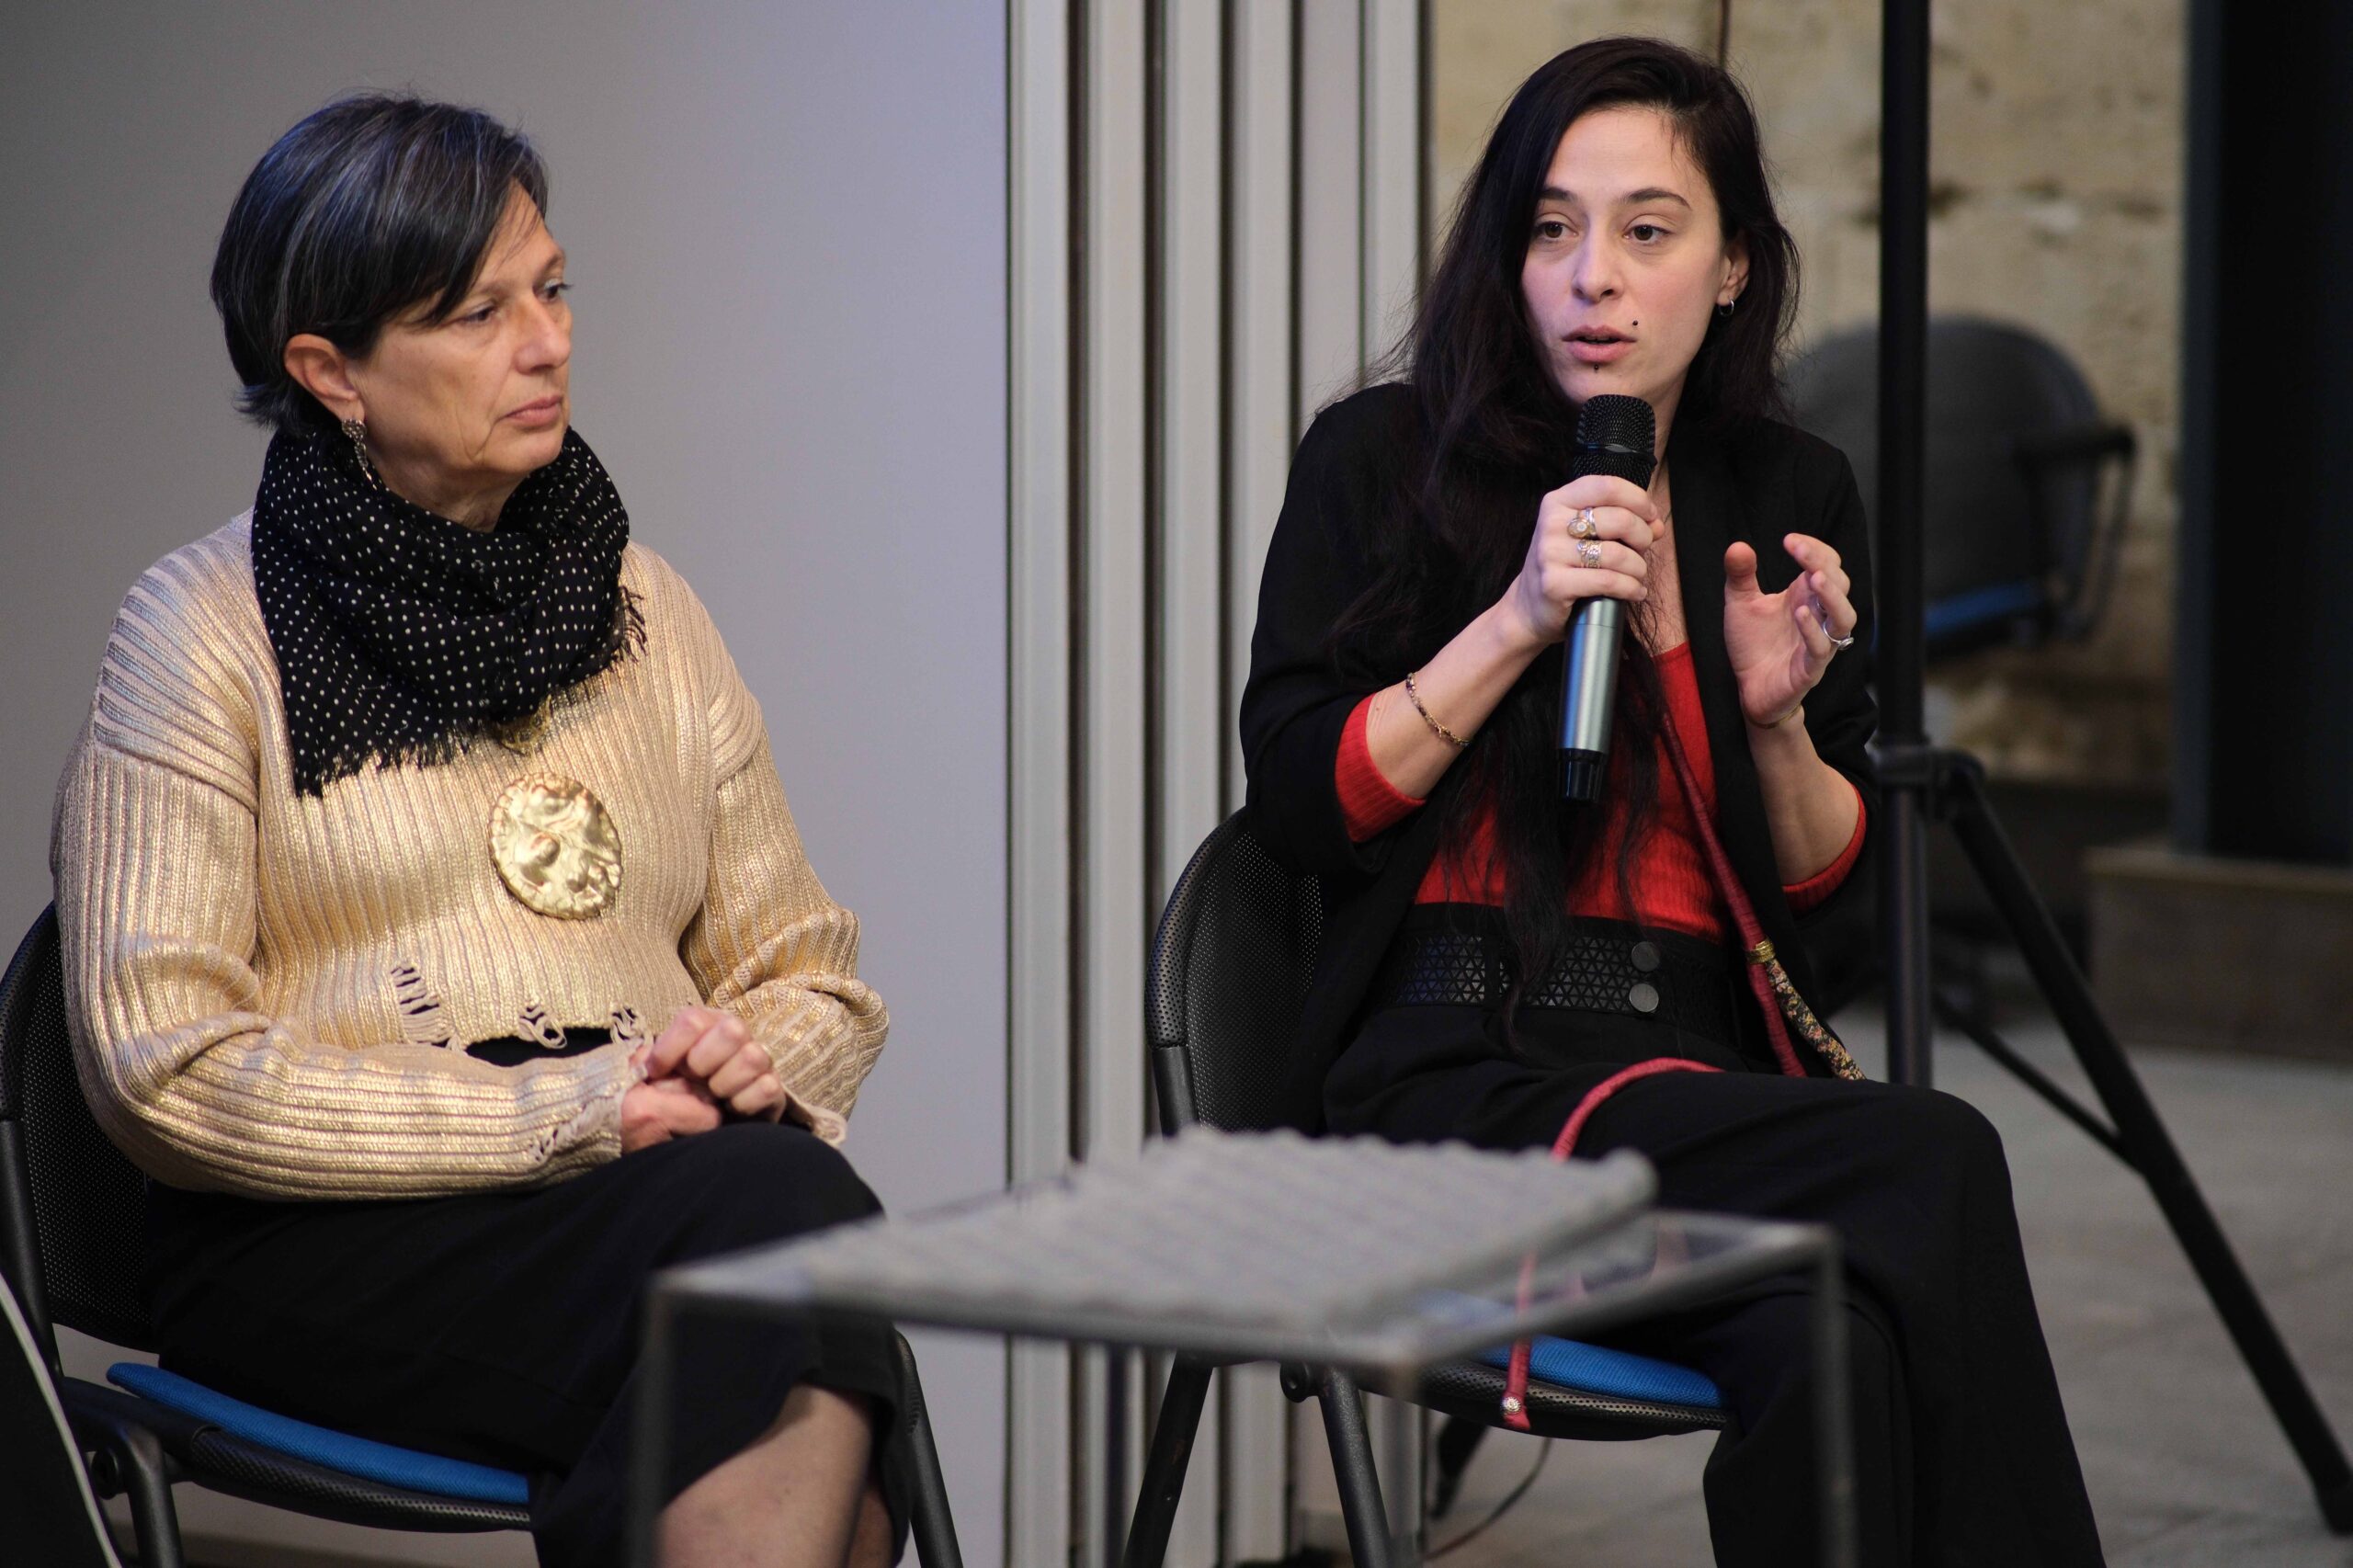 Chiara Manca talking about her curator experience - Photo: Antonello Casu